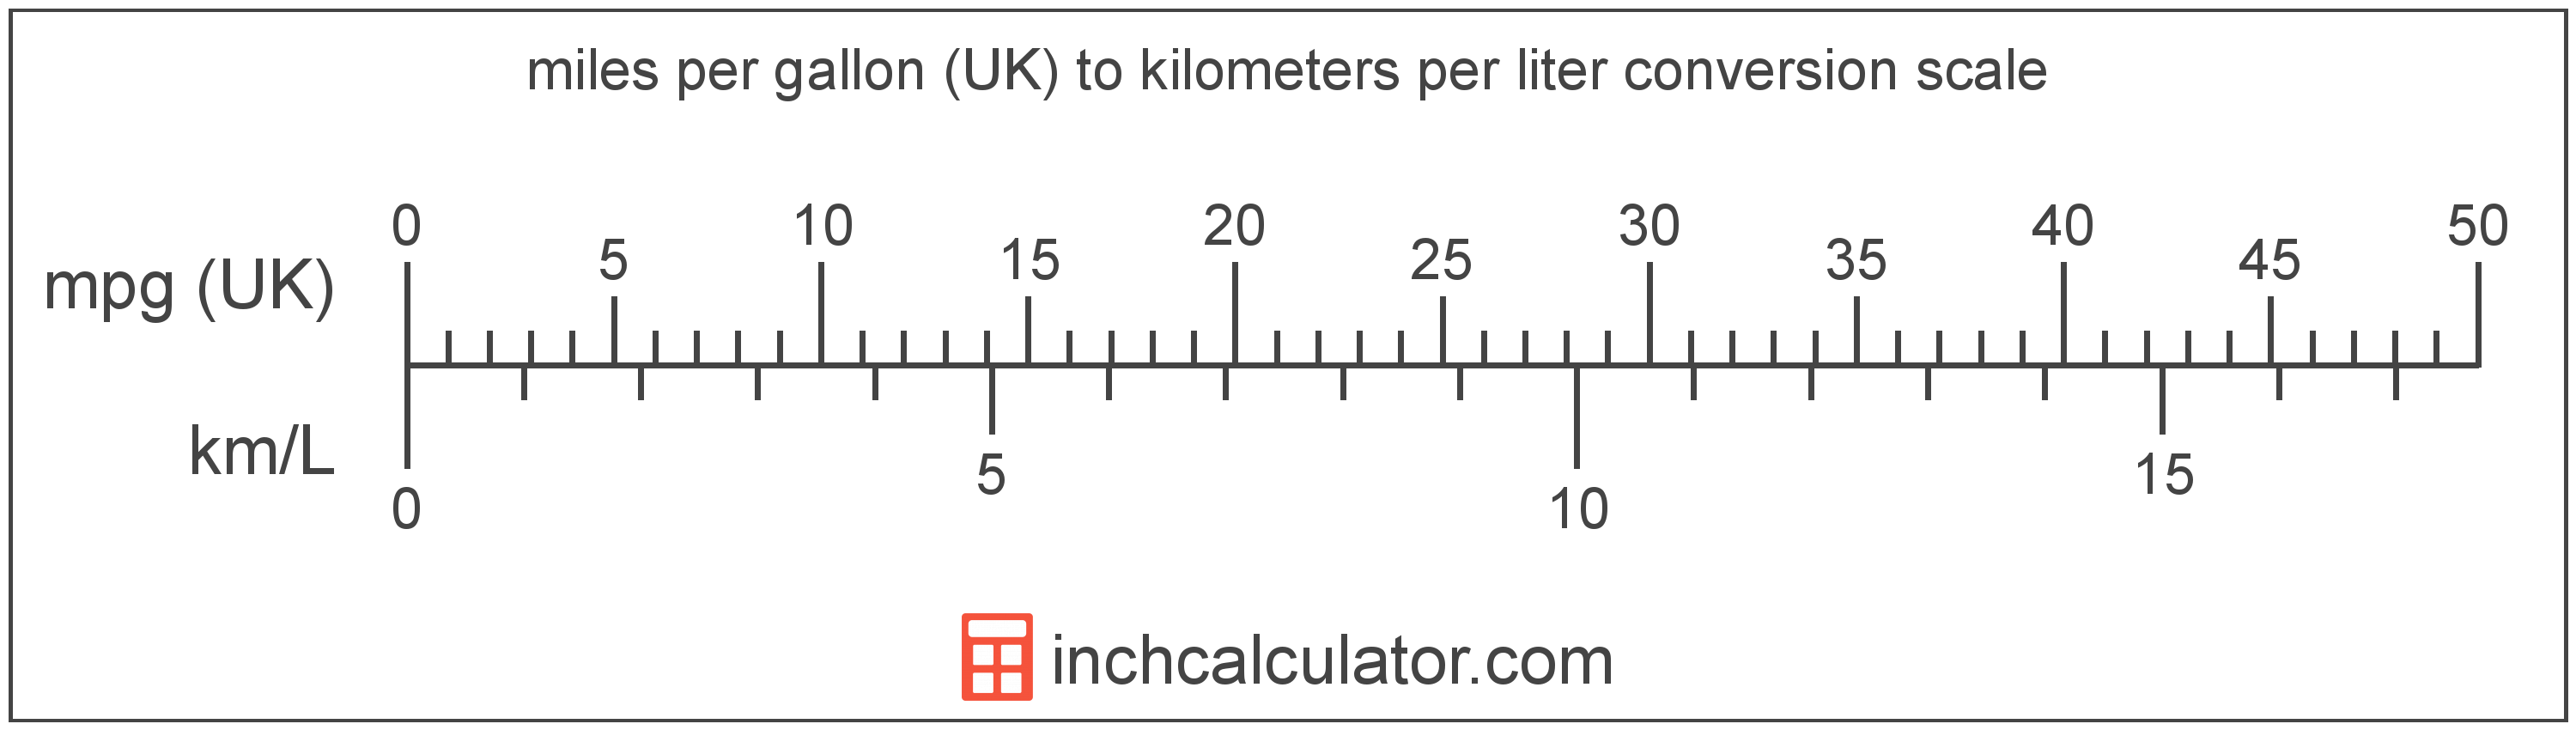 conversion scale showing miles per gallon (UK) and equivalent kilometers per liter fuel economy values